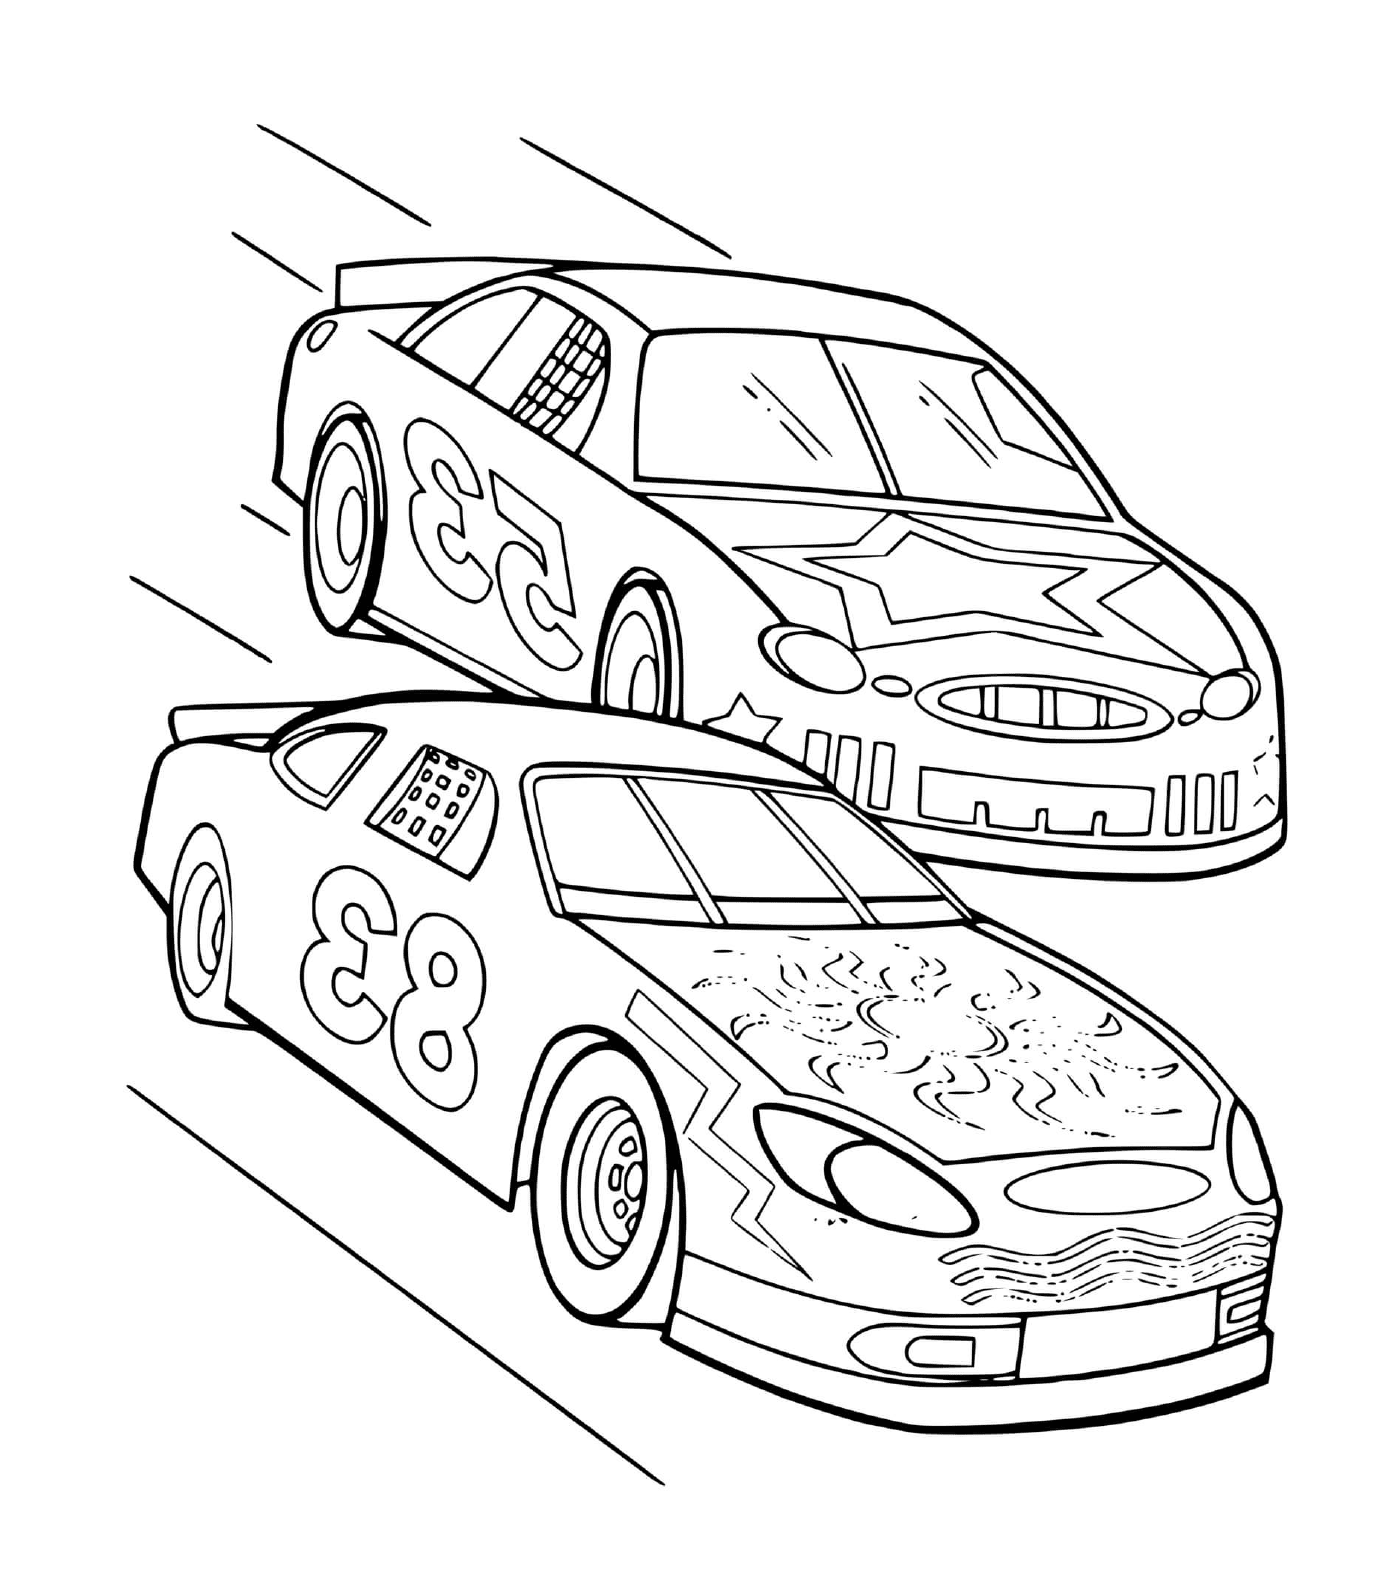  Two racing cars 